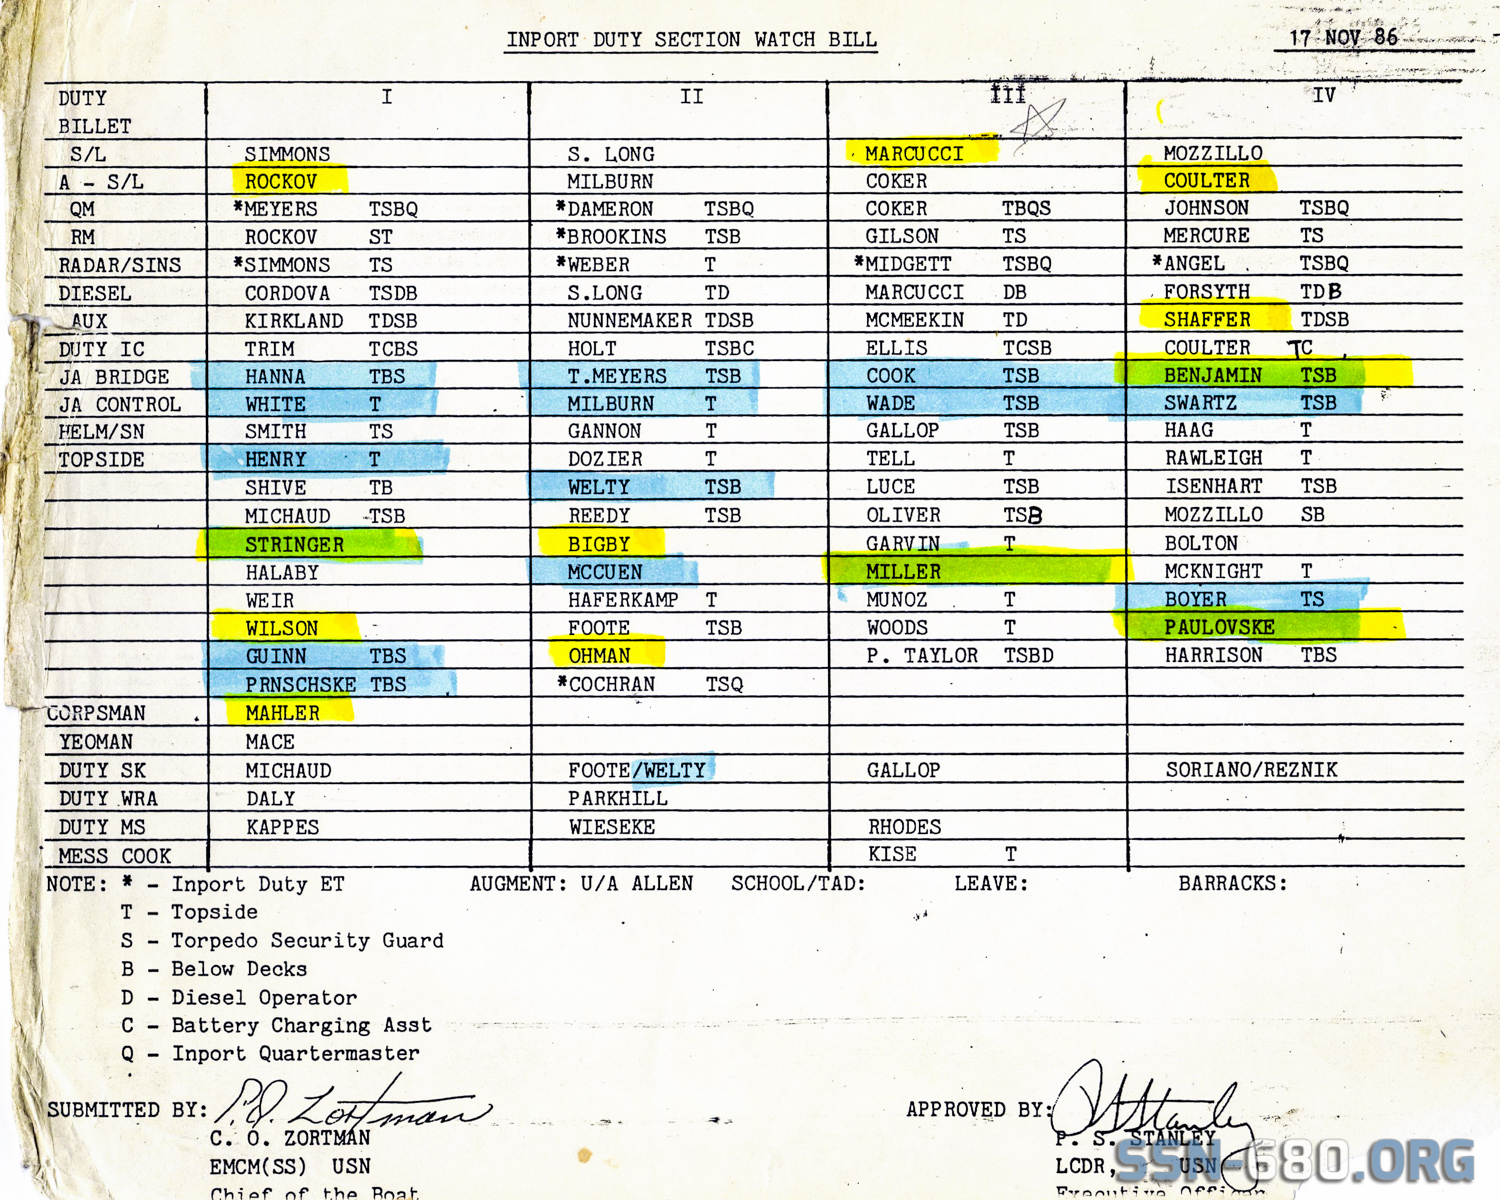 USS WILLIAM H. BATES (SSN 680) - Forward Inport Duty Section Watchbill -  17 NOV 1986